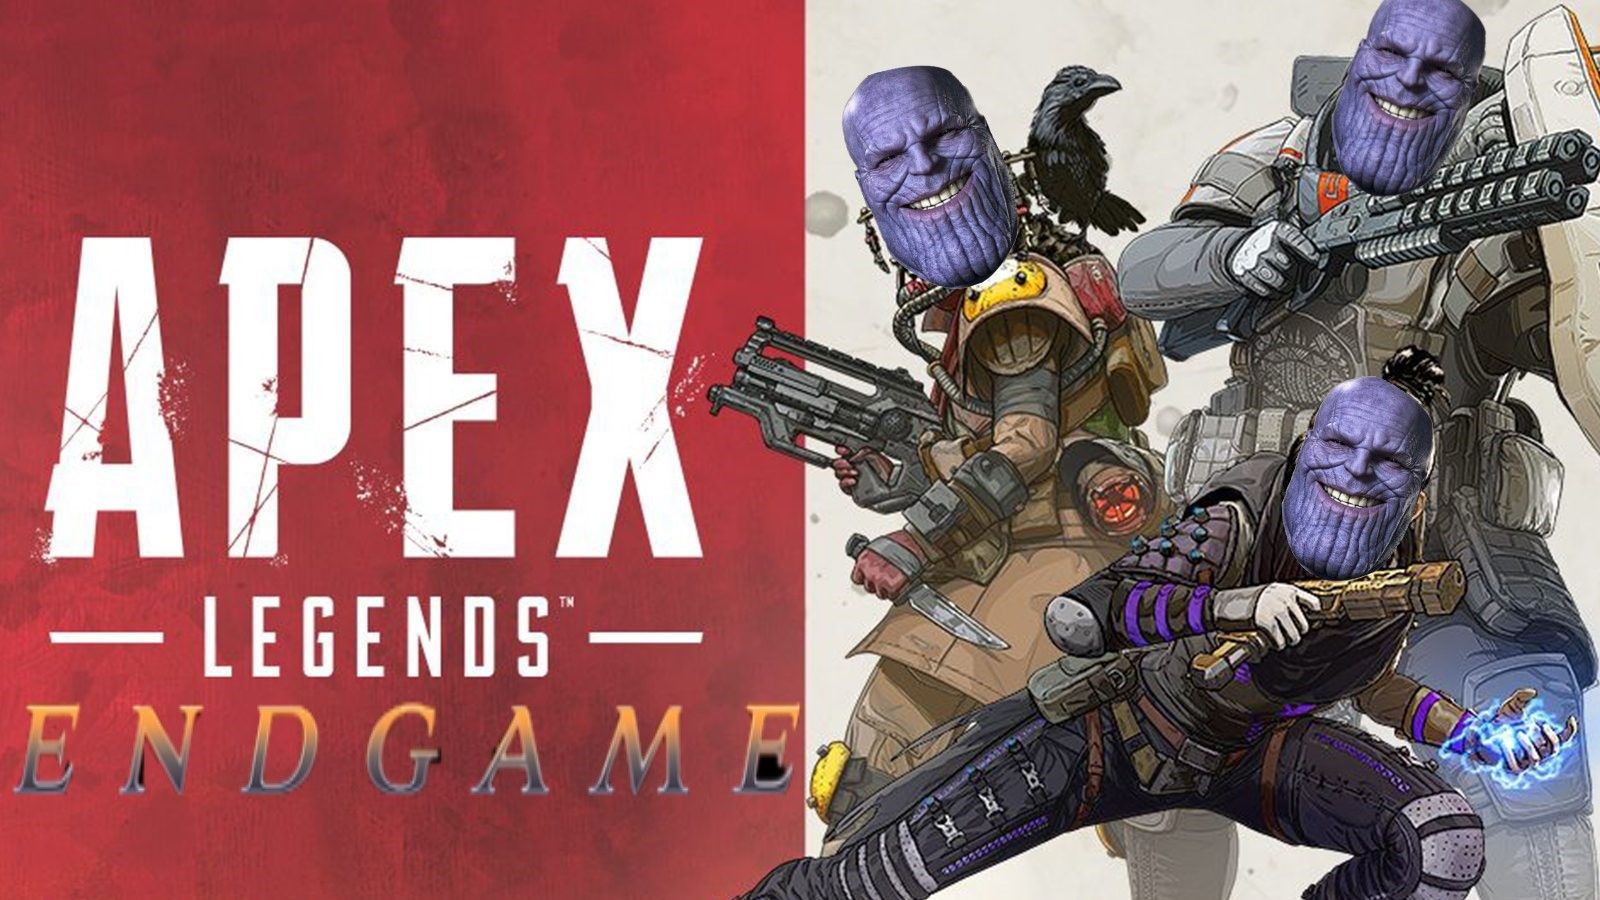 Apex Legends Avengers Endgame End Game Marvel Studios Crossover Trailer